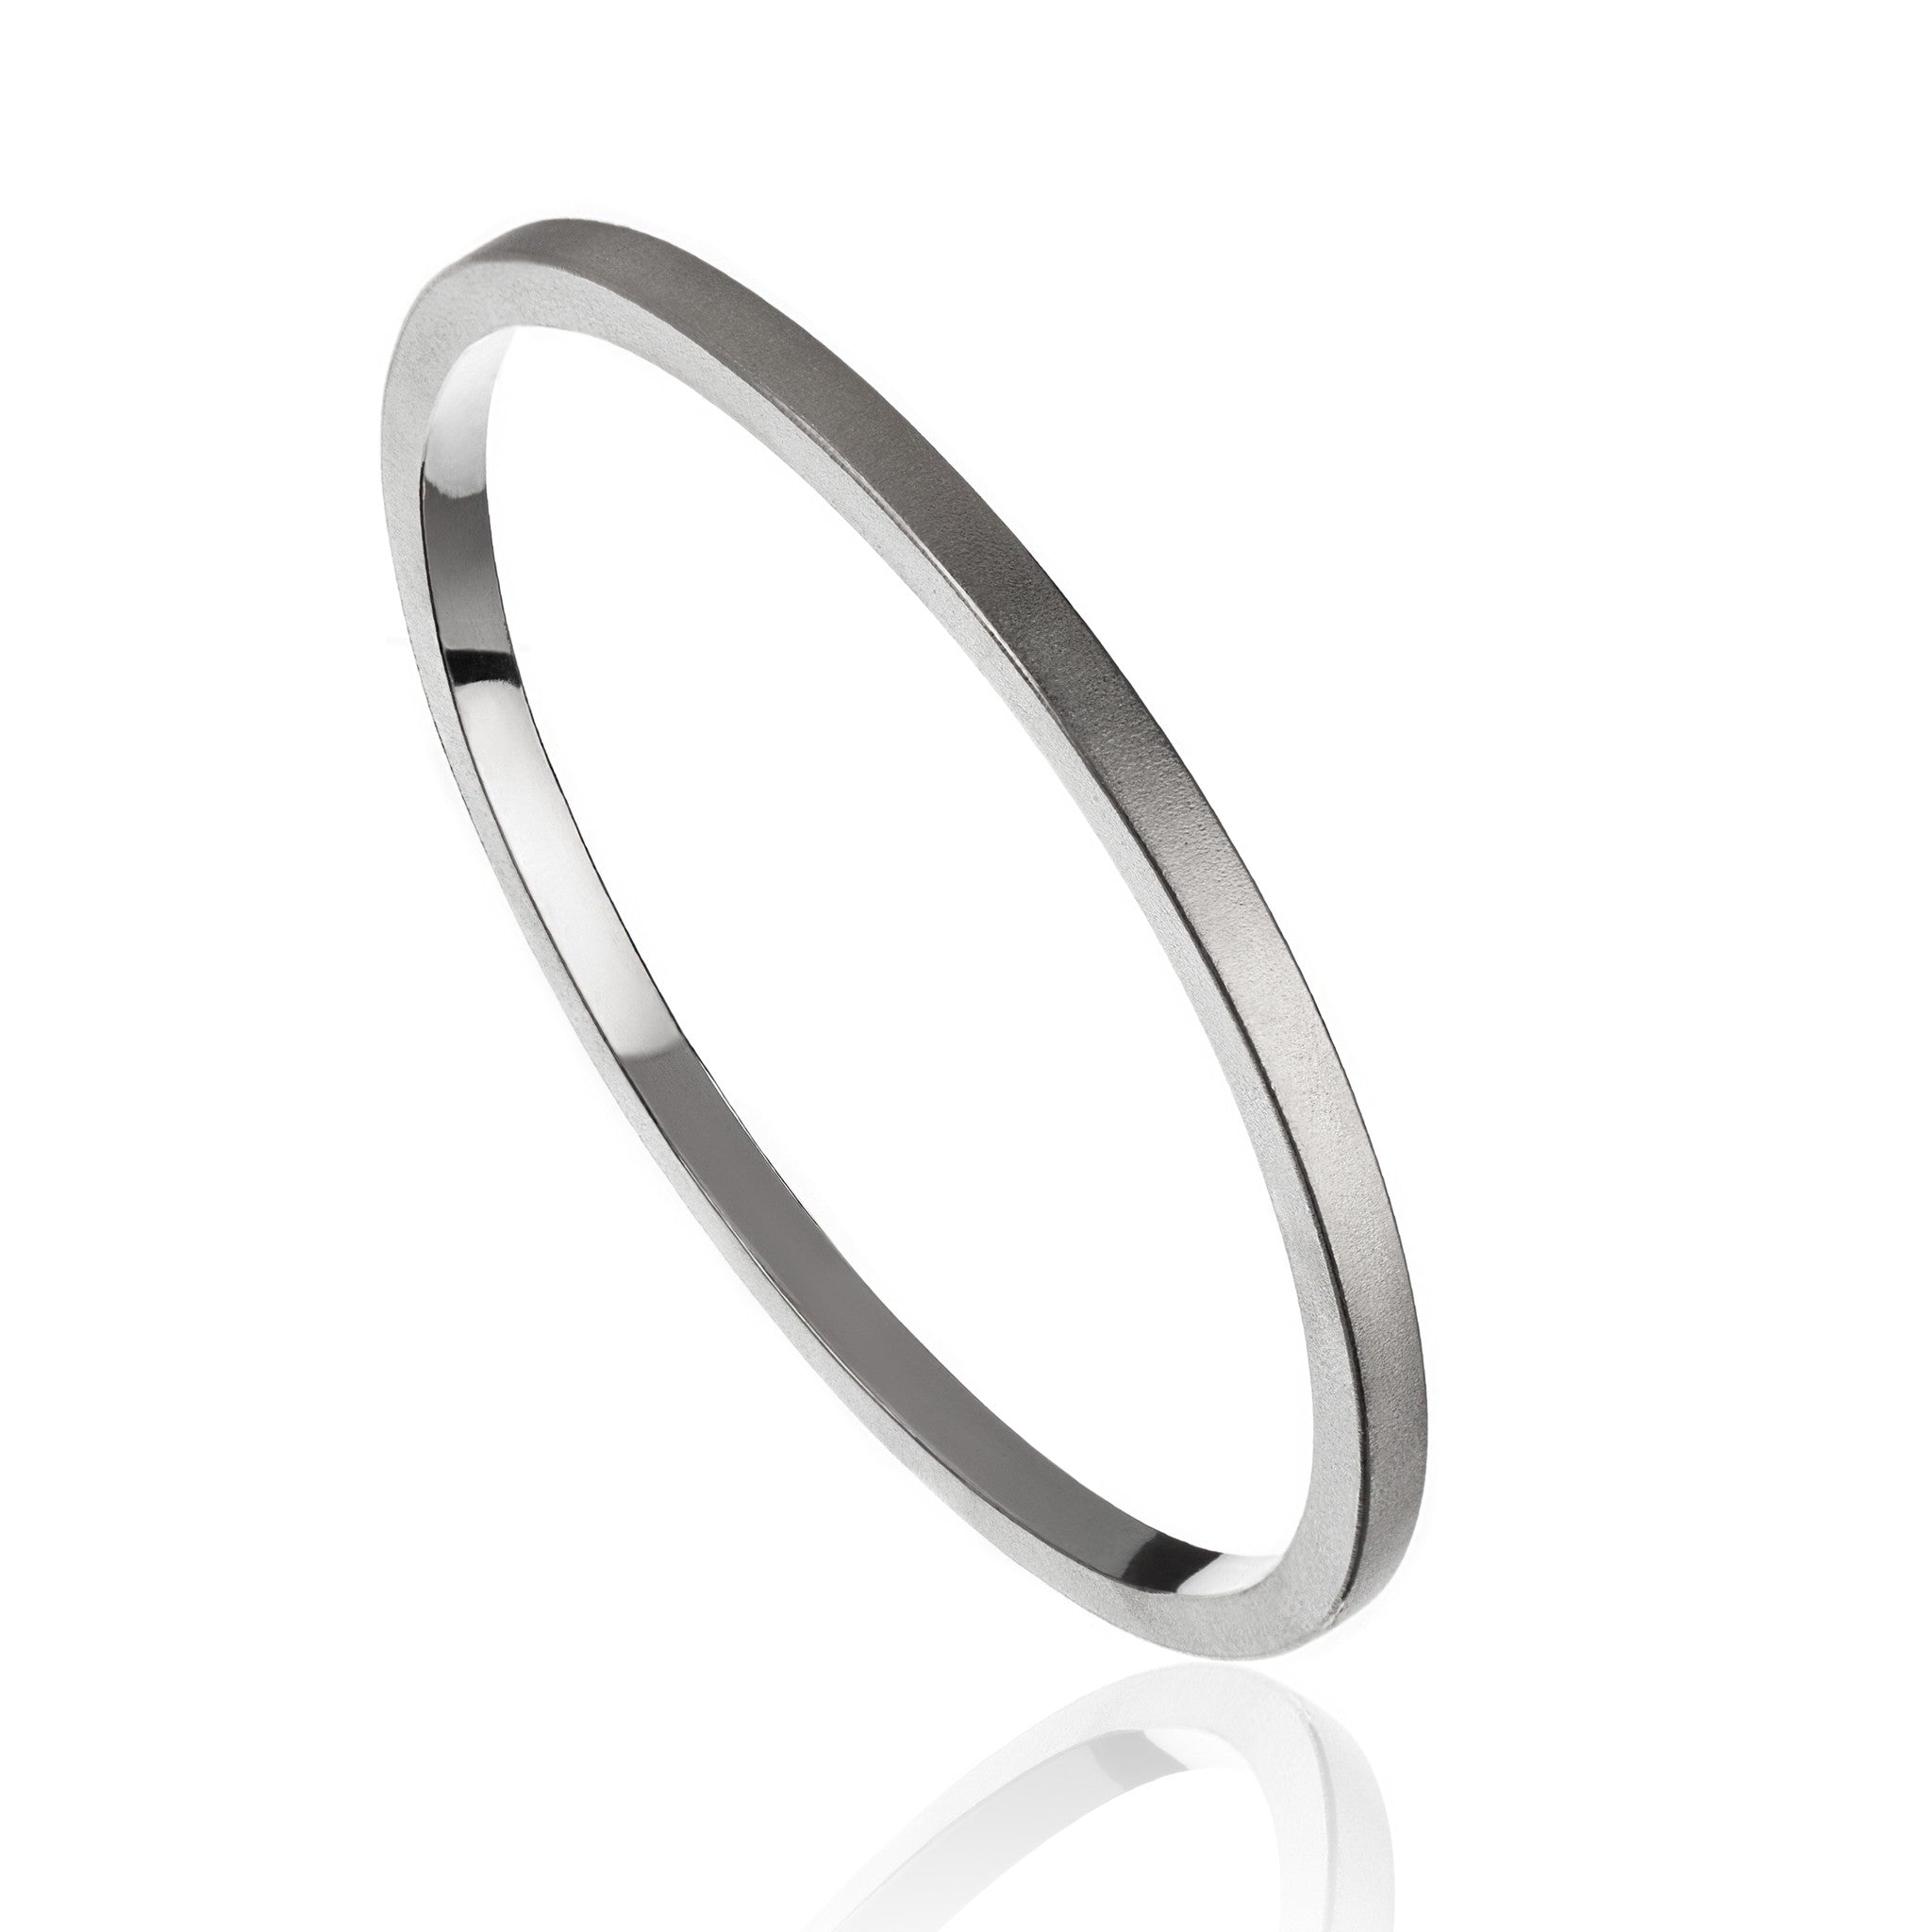 Undlien design silver bracelet 